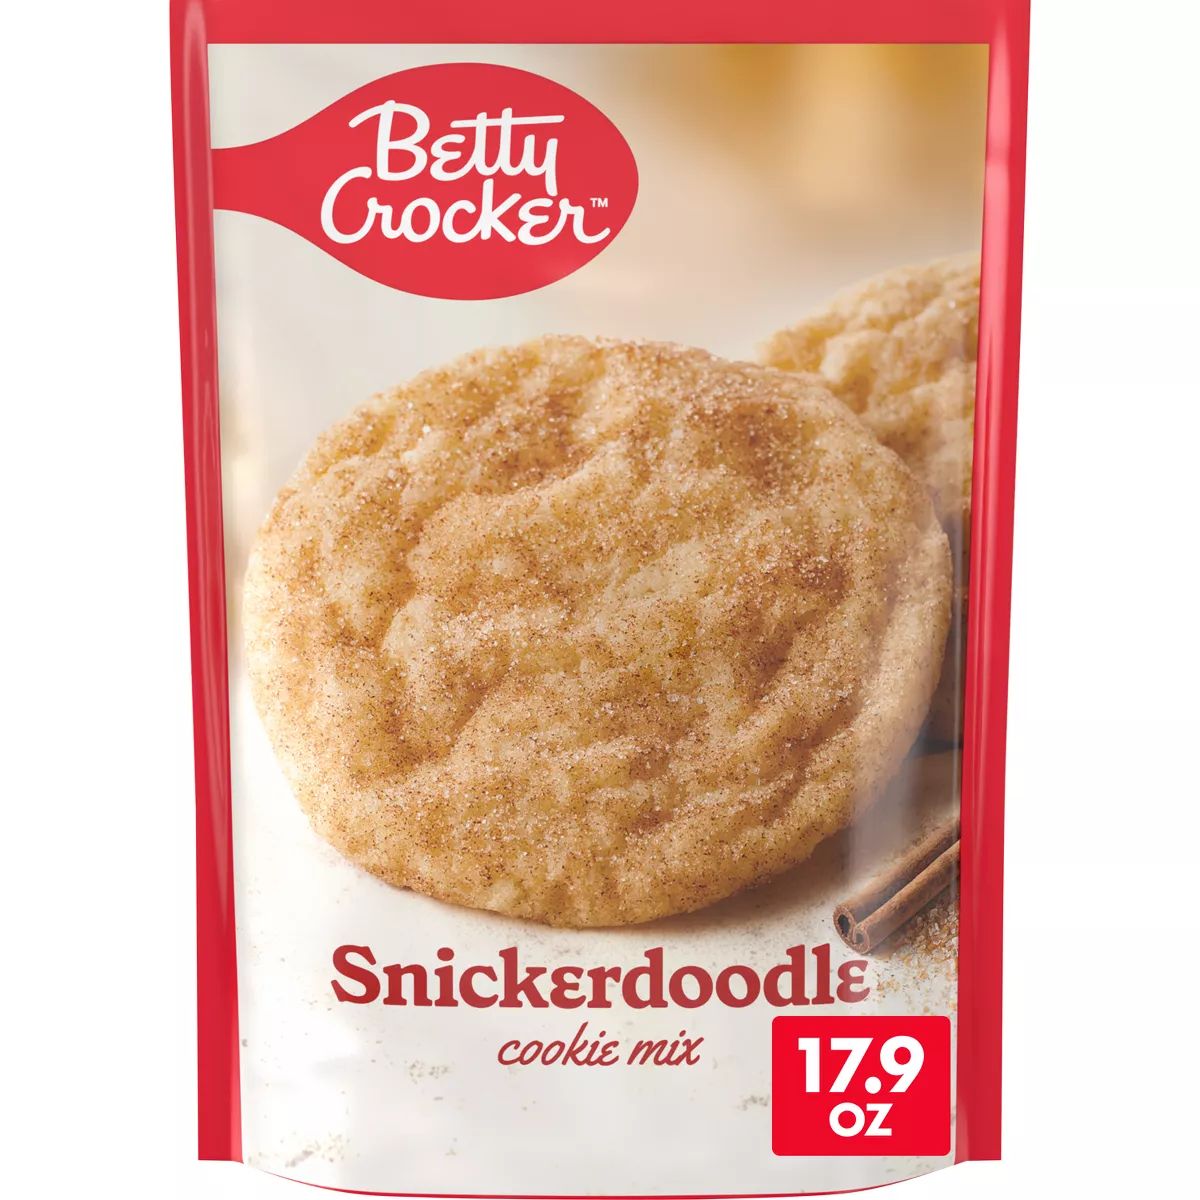 Betty Crocker Snickerdoodle Cookie Mix - 17.9oz | Target